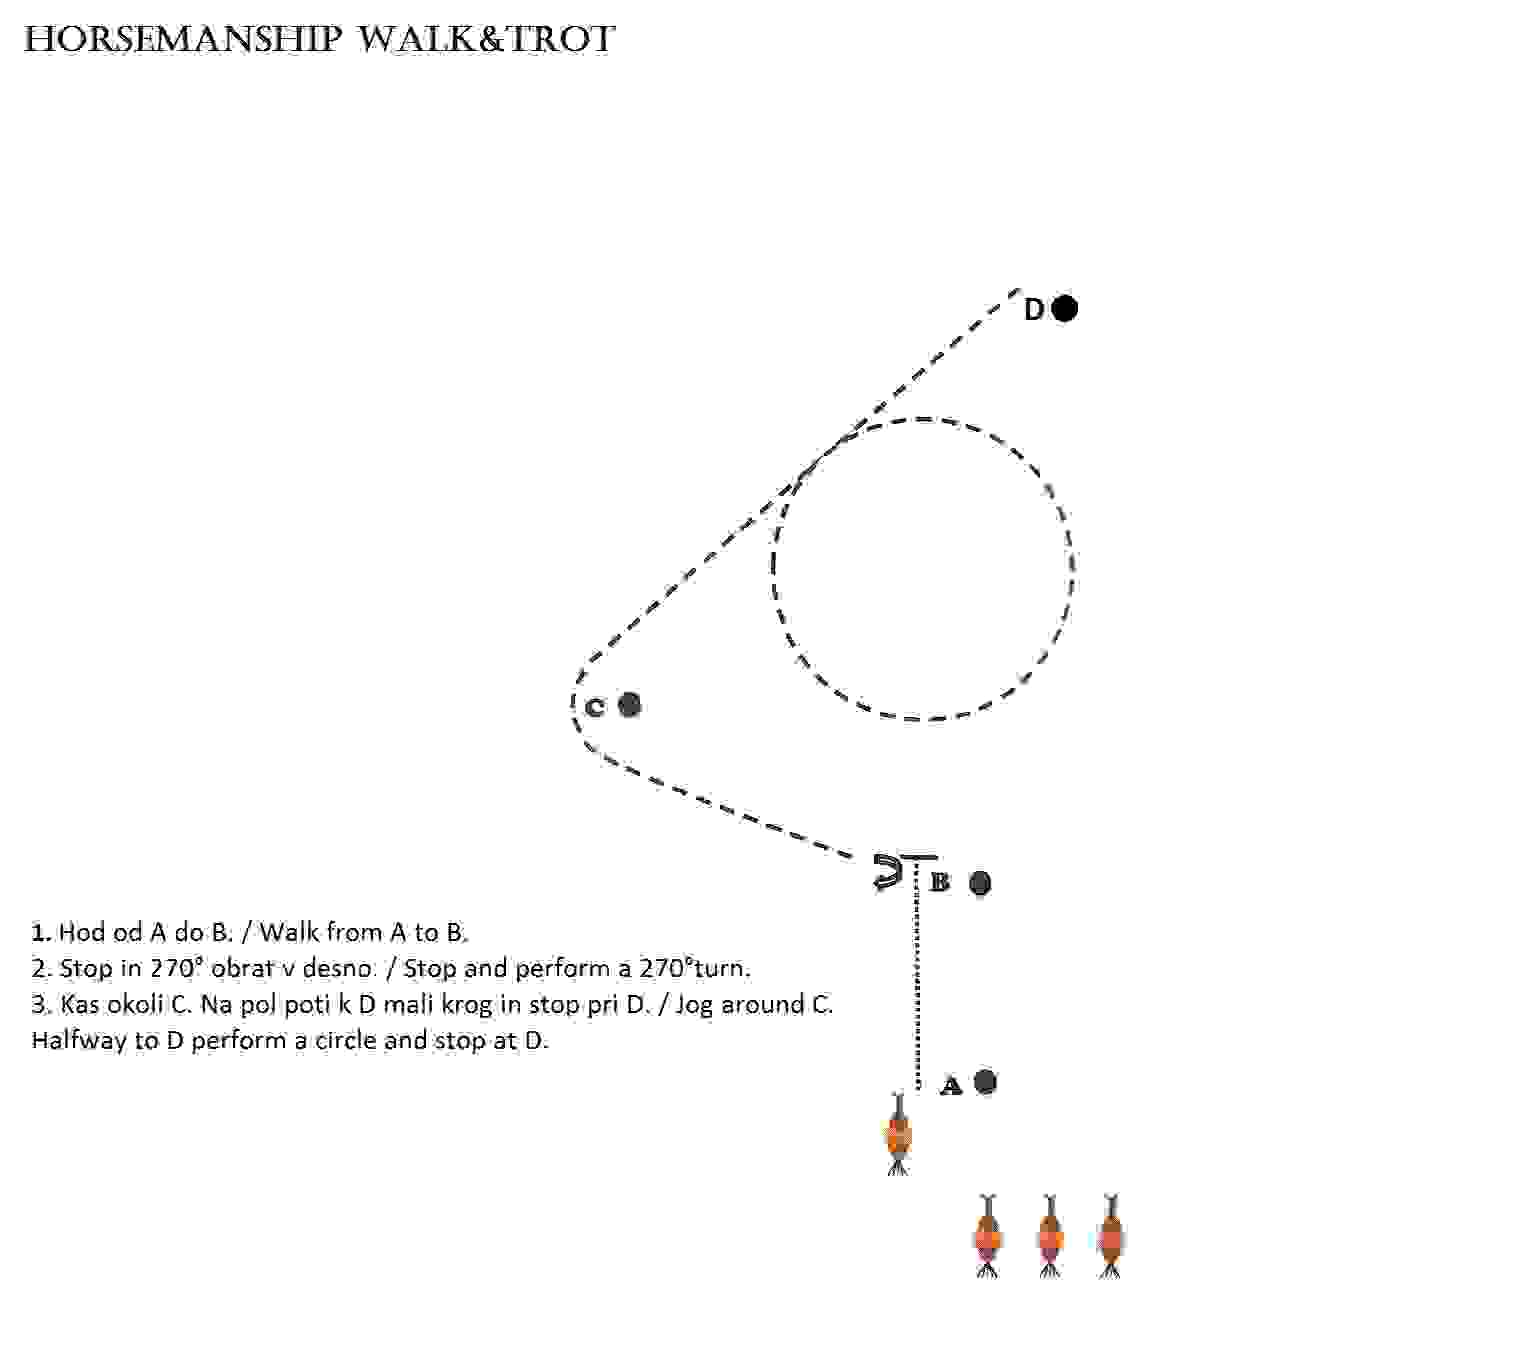 Horsemanship walk&trot